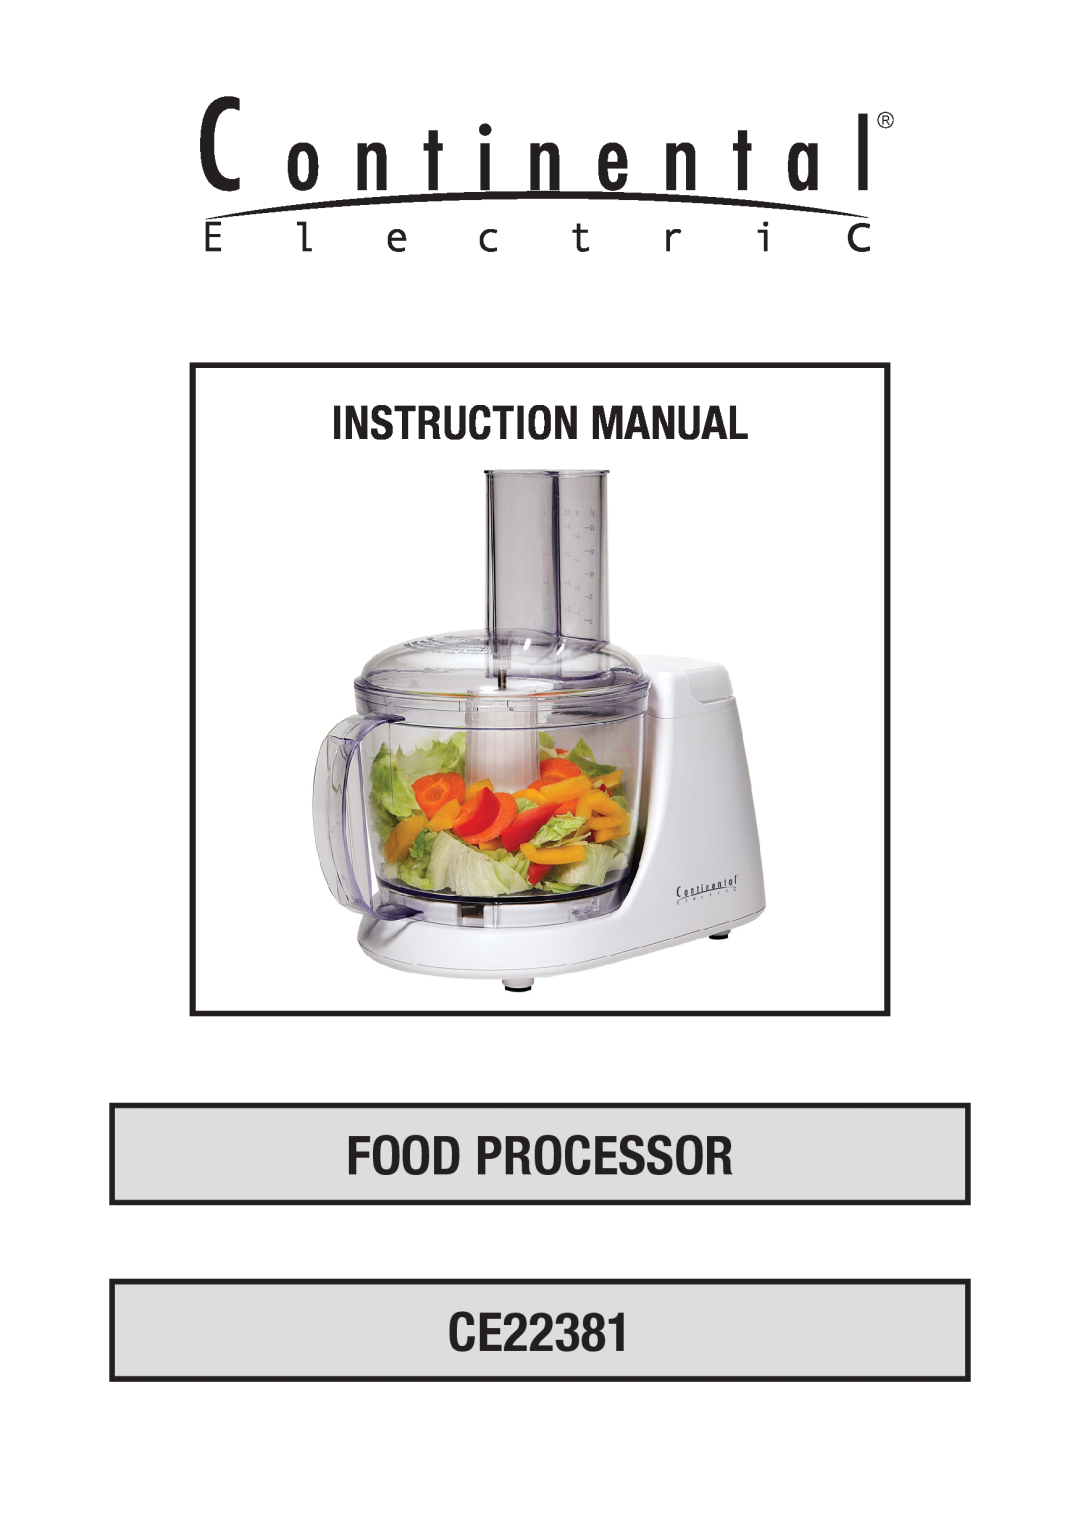 Continental Electric instruction manual FOOD PROCESSOR CE22381 